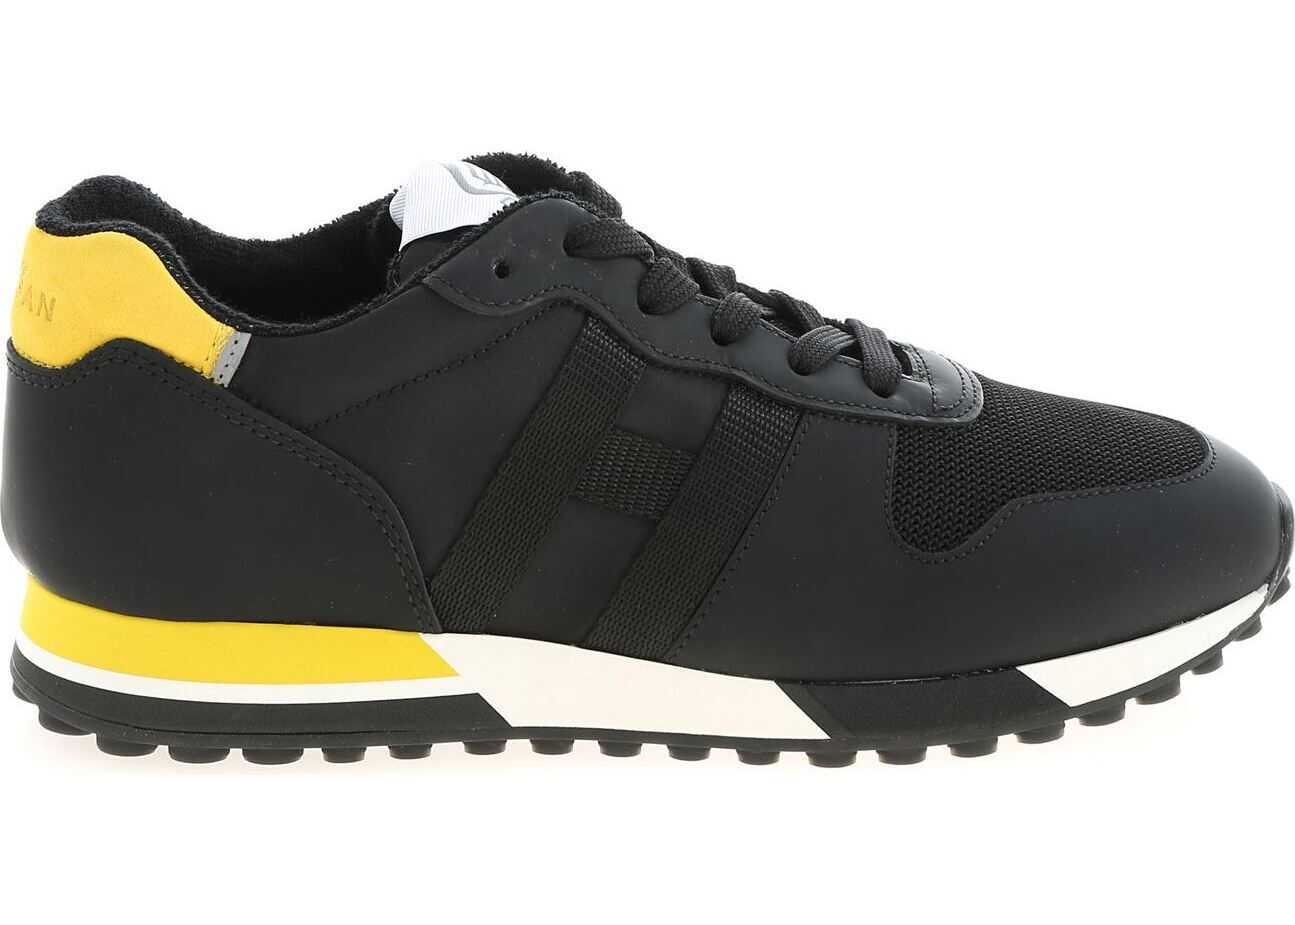 Hogan H383 Sneakers In Black And Yellow Black